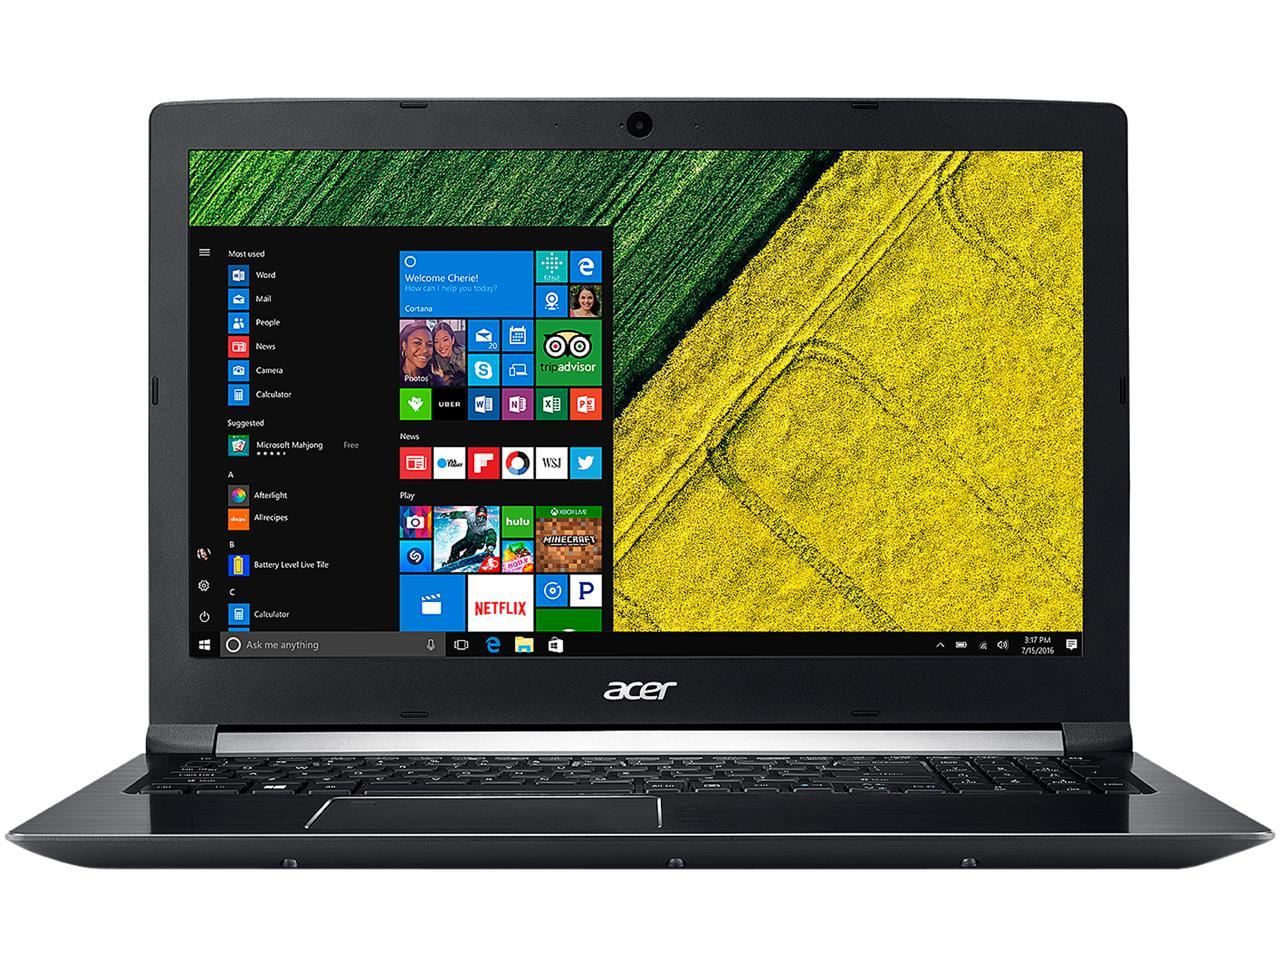 Acer Aspire 7 A717-72G-559X 17.3" FHD, Intel Core i5 8300H (2.30 GHz), NVIDIA GeForce GTX 1050, 8 GB DDR4 Memory, 1 TB HDD, Windows 10 Home